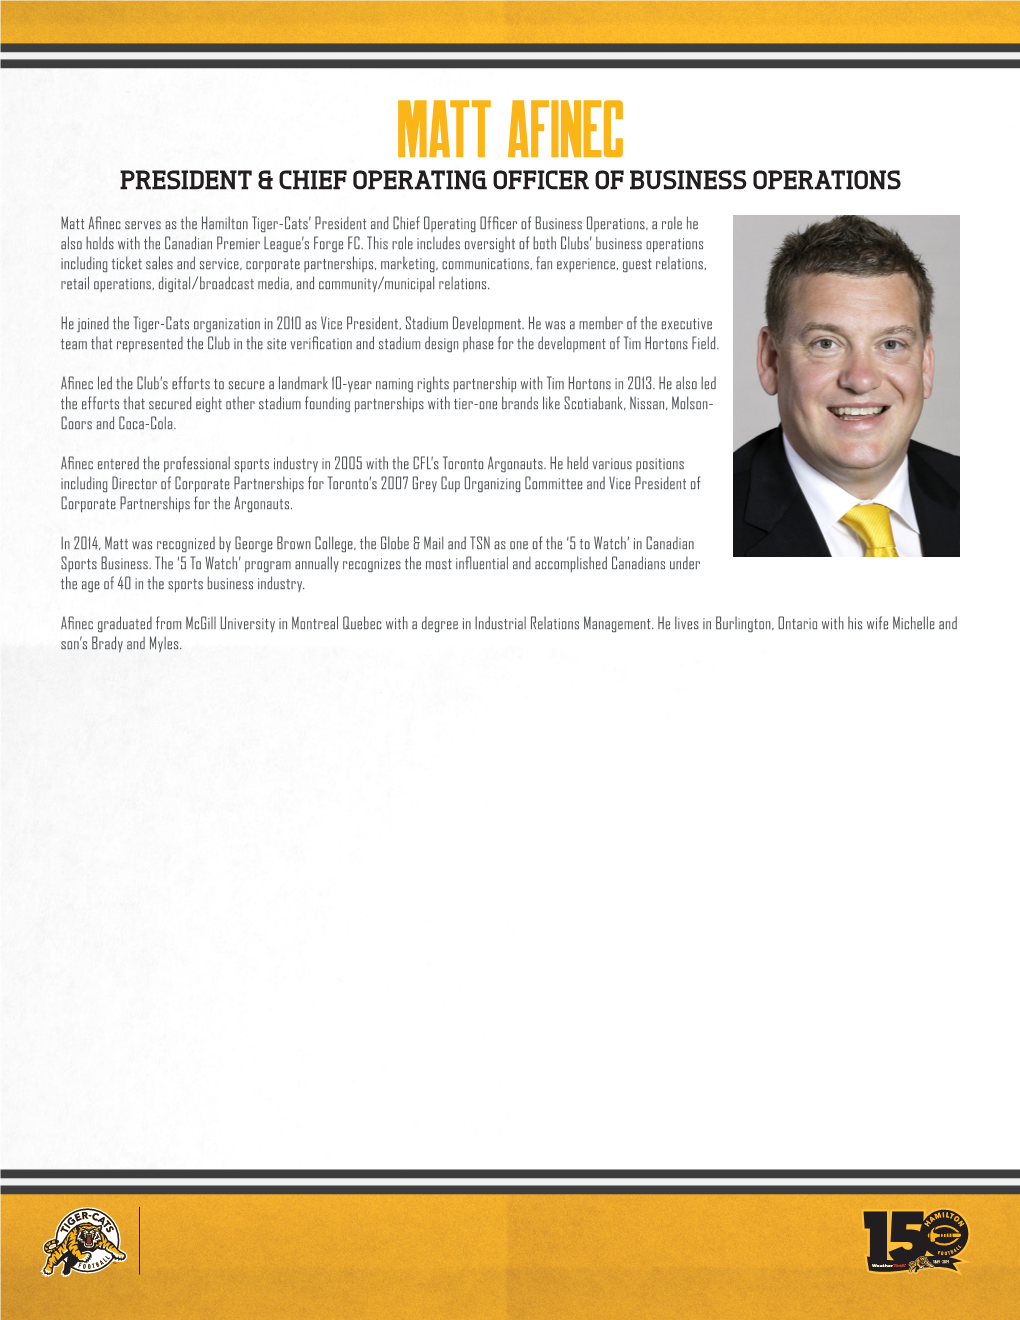 Matt Afinec PRESIDENT & CHIEF OPERATING OFFICER of BUSINESS OPERATIONS